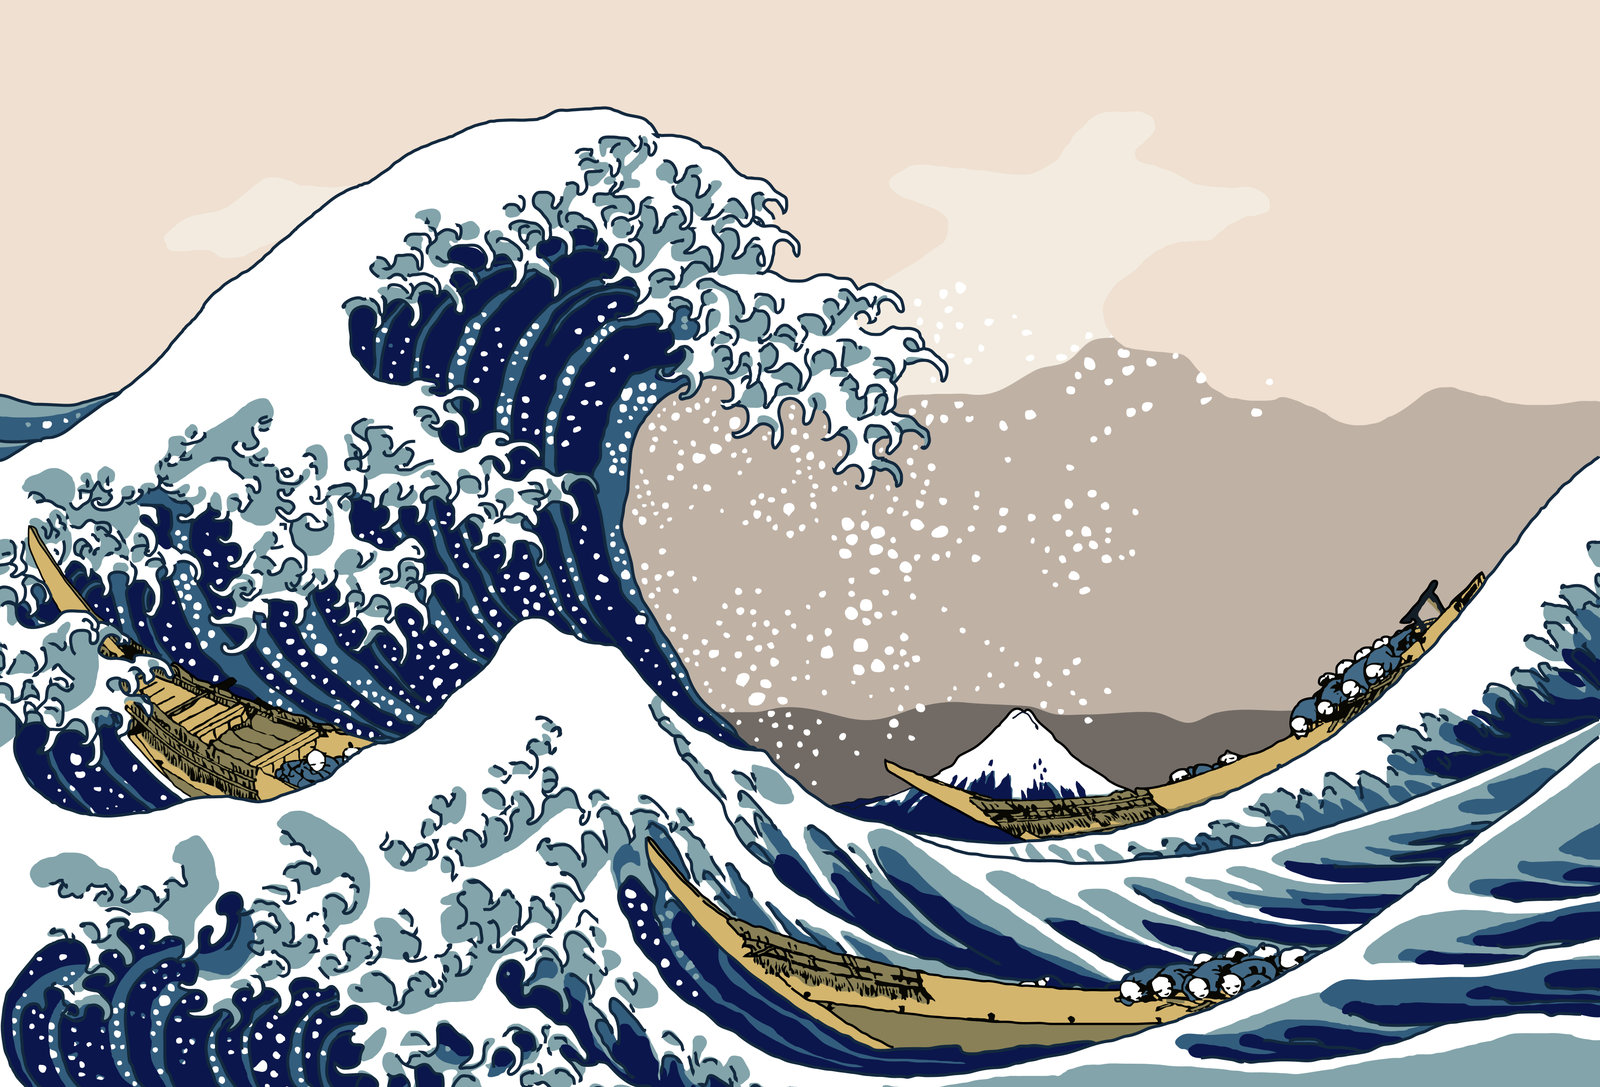 Hokusai By Refuse11